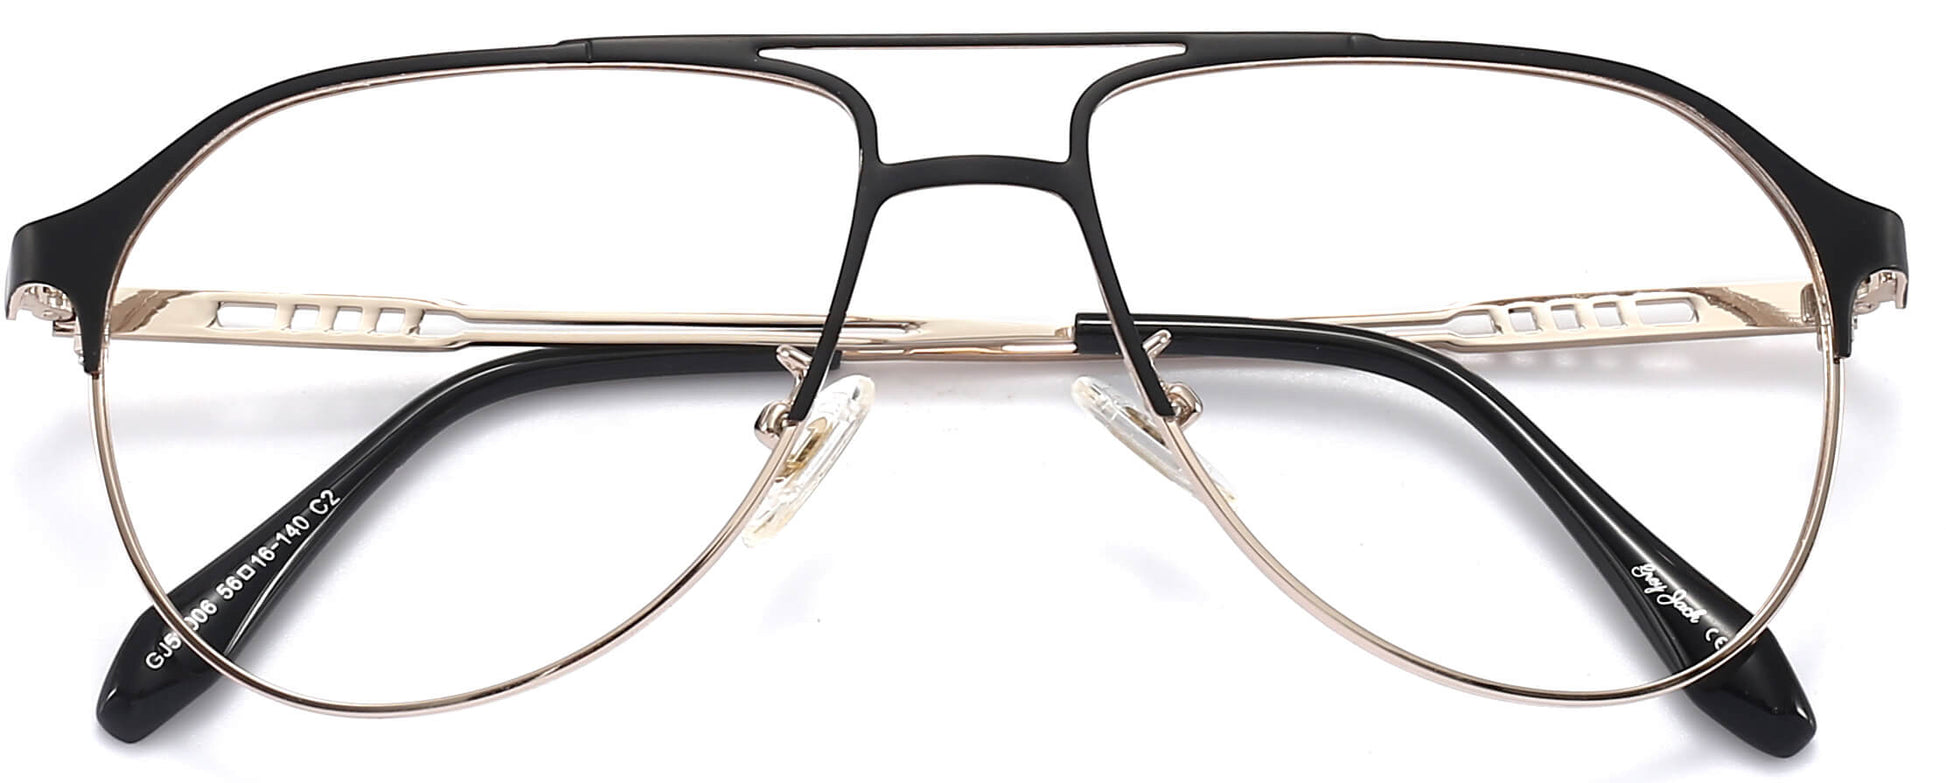 Curtis Aviator Black Eyeglasses from ANRRI, closed view